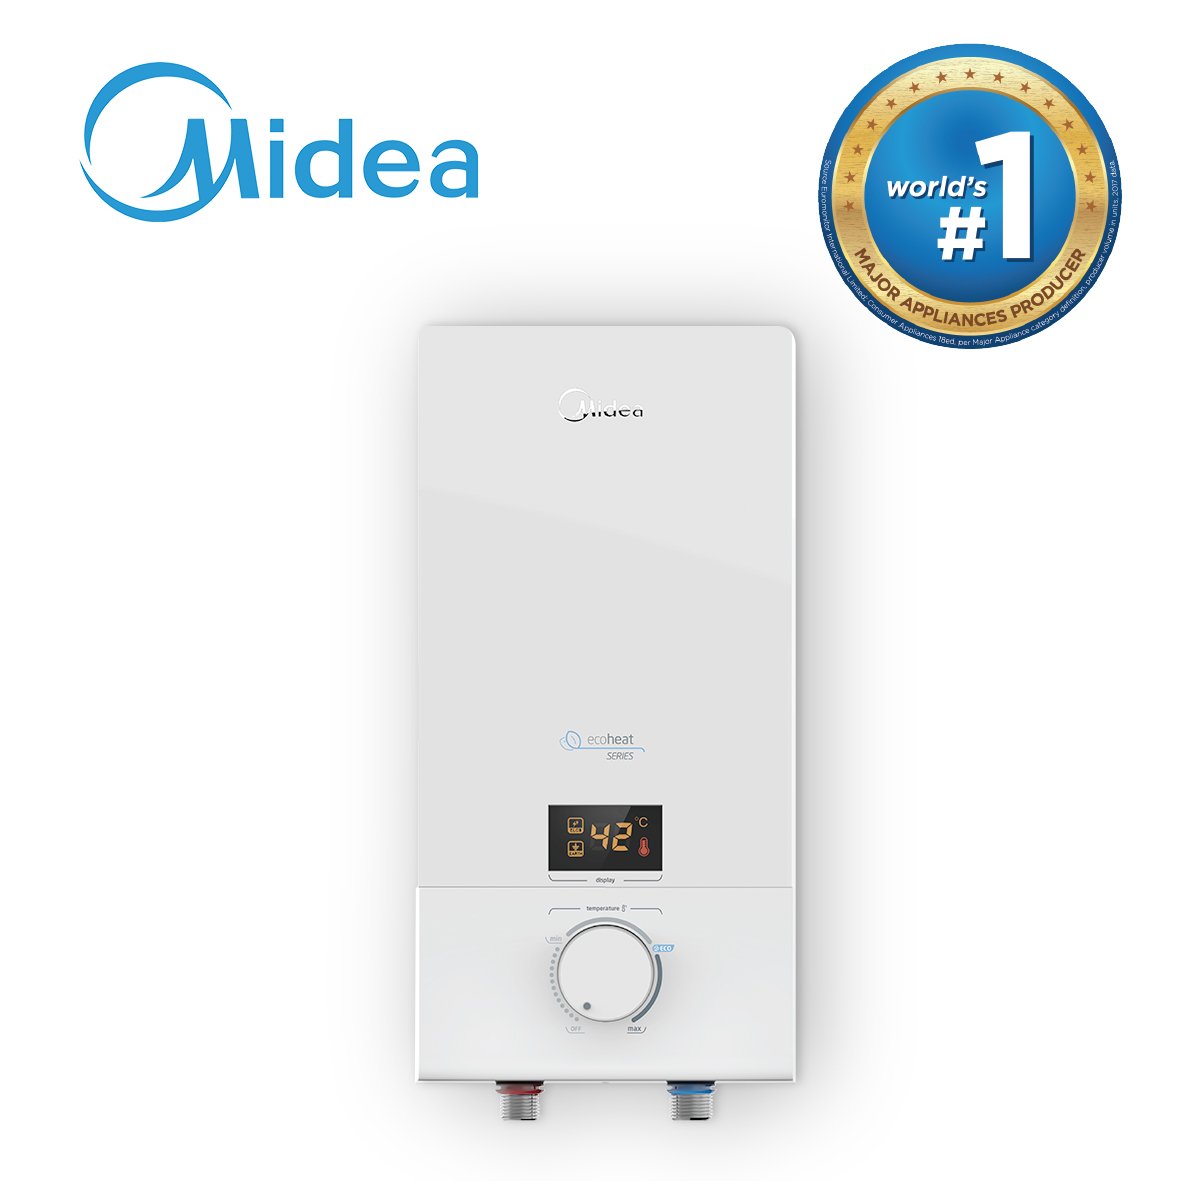 Midea Digital Display Shower heater